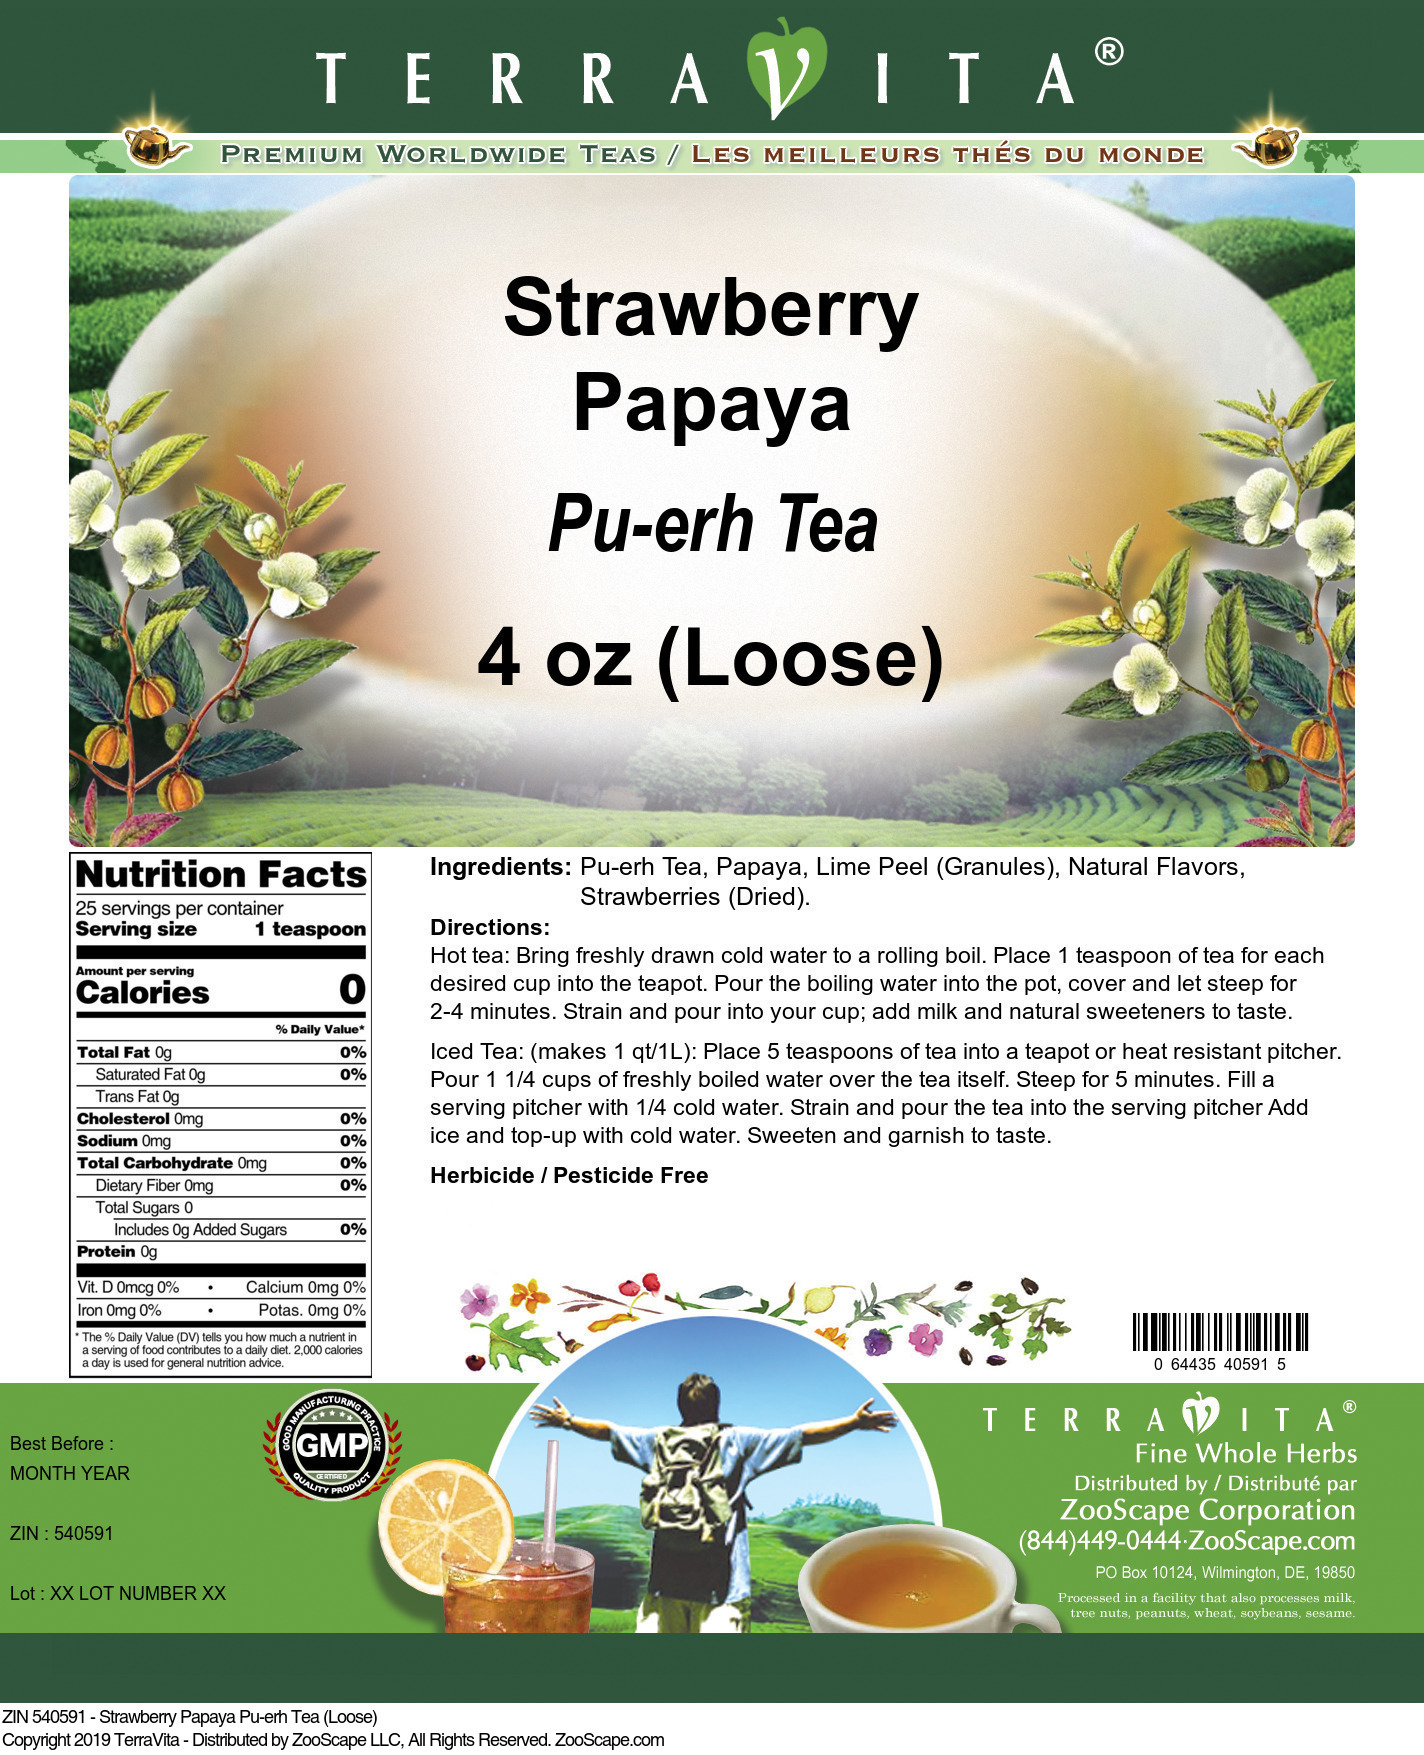 Strawberry Papaya Pu-erh Tea (Loose) - Label